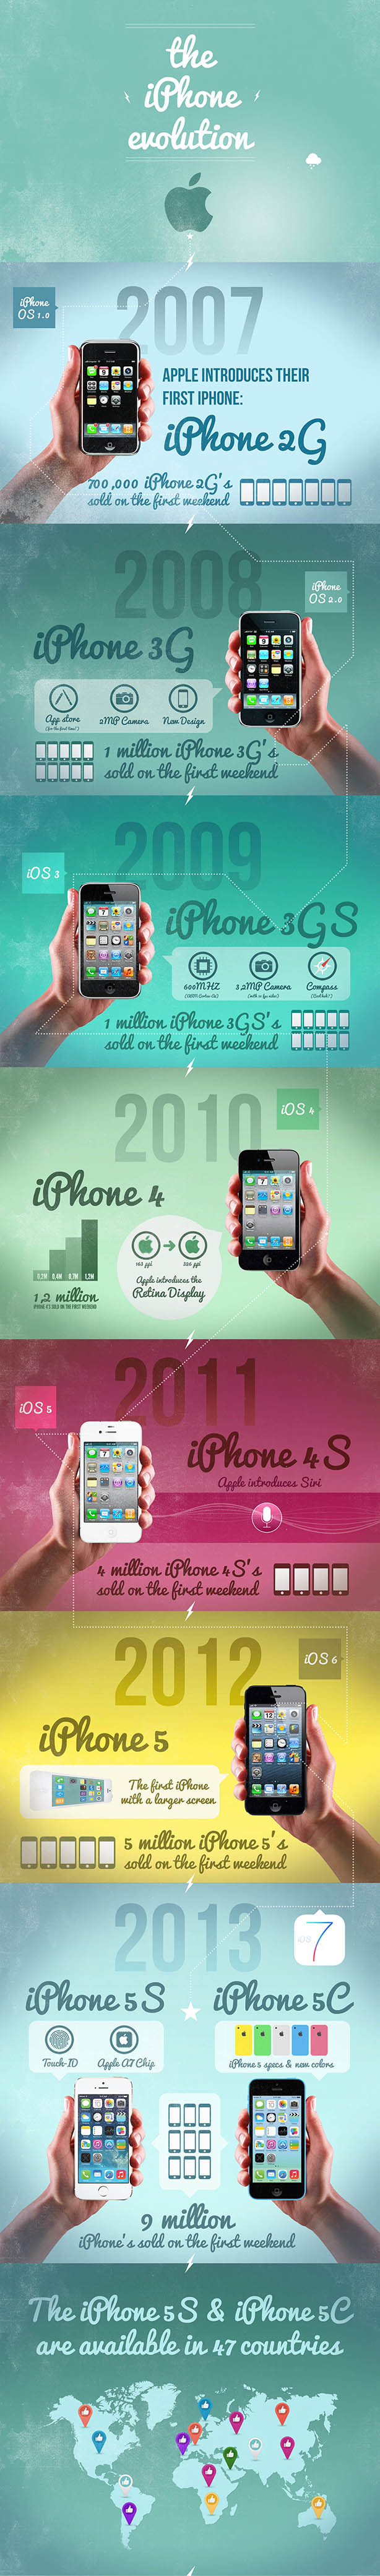 infografica-evoluzione-iphone